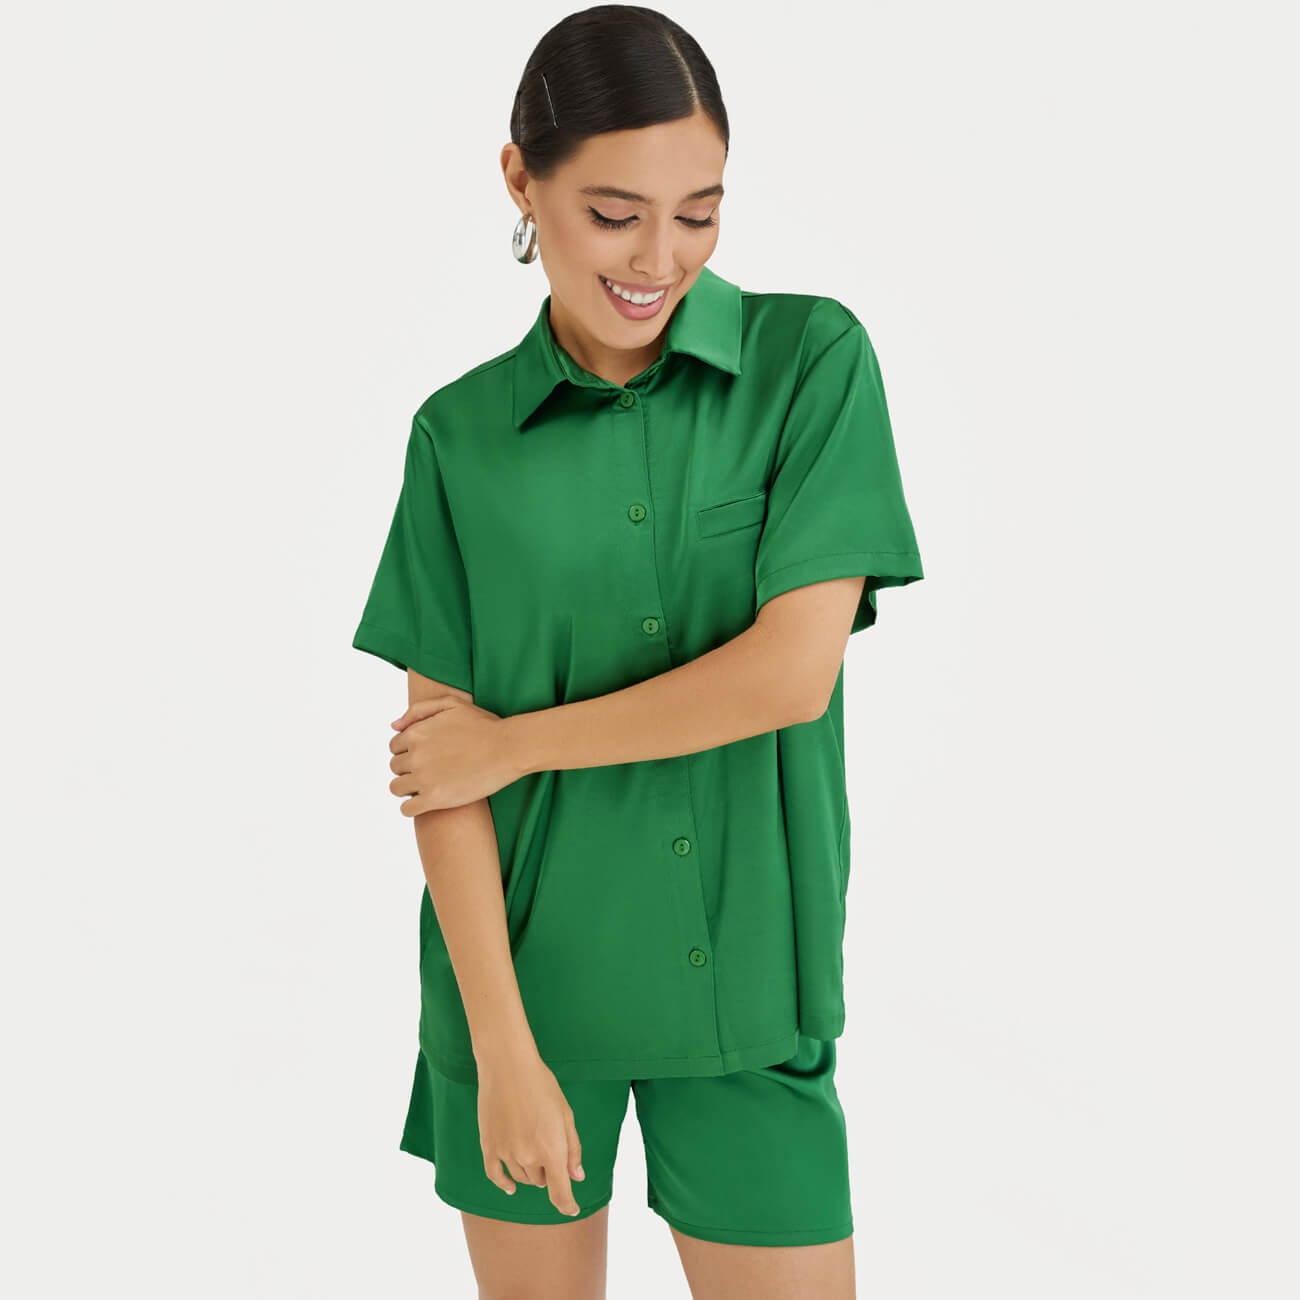 Рубашка женская, р. XL, с коротким рукавом, полиэстер/эластан, зеленая, Madeline рубашка женская домашняя р xl с коротким рукавом полиэстер эластан серая ирисы mary